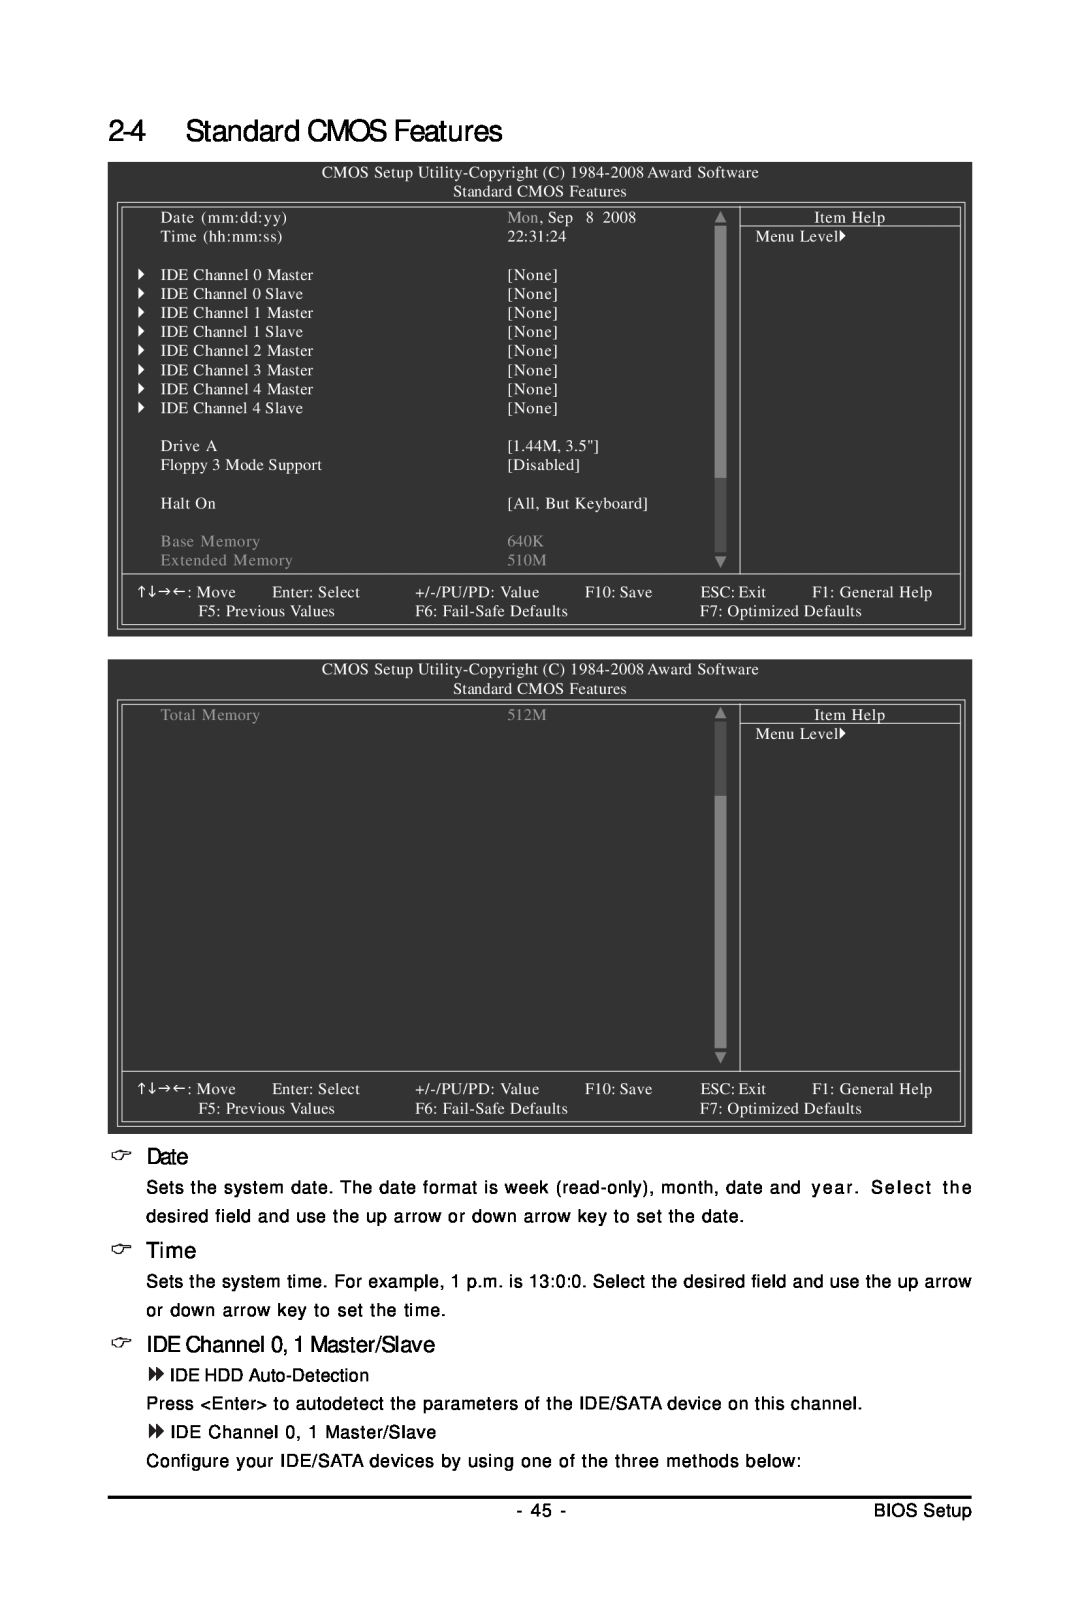 Gigabyte GA-EP45-UD3LR user manual Standard CMOS Features, Date, Time, IDE Channel 0, 1 Master/Slave 